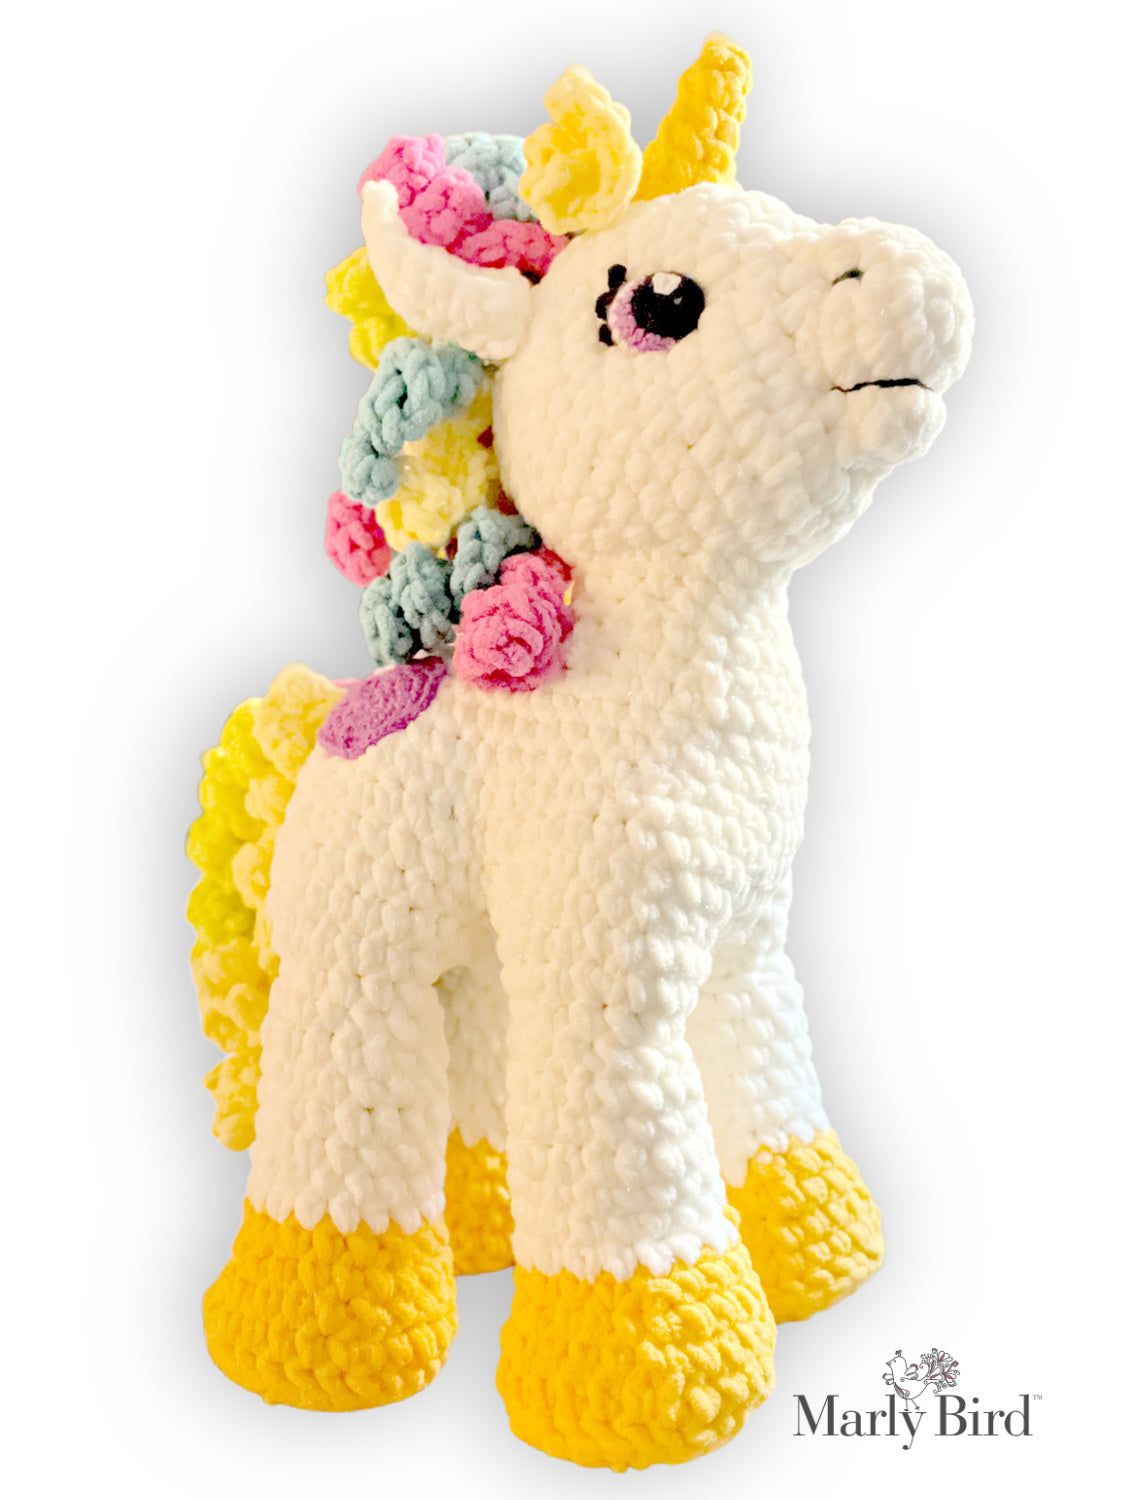 Sparkle Crochet Unicorn Amigurumi